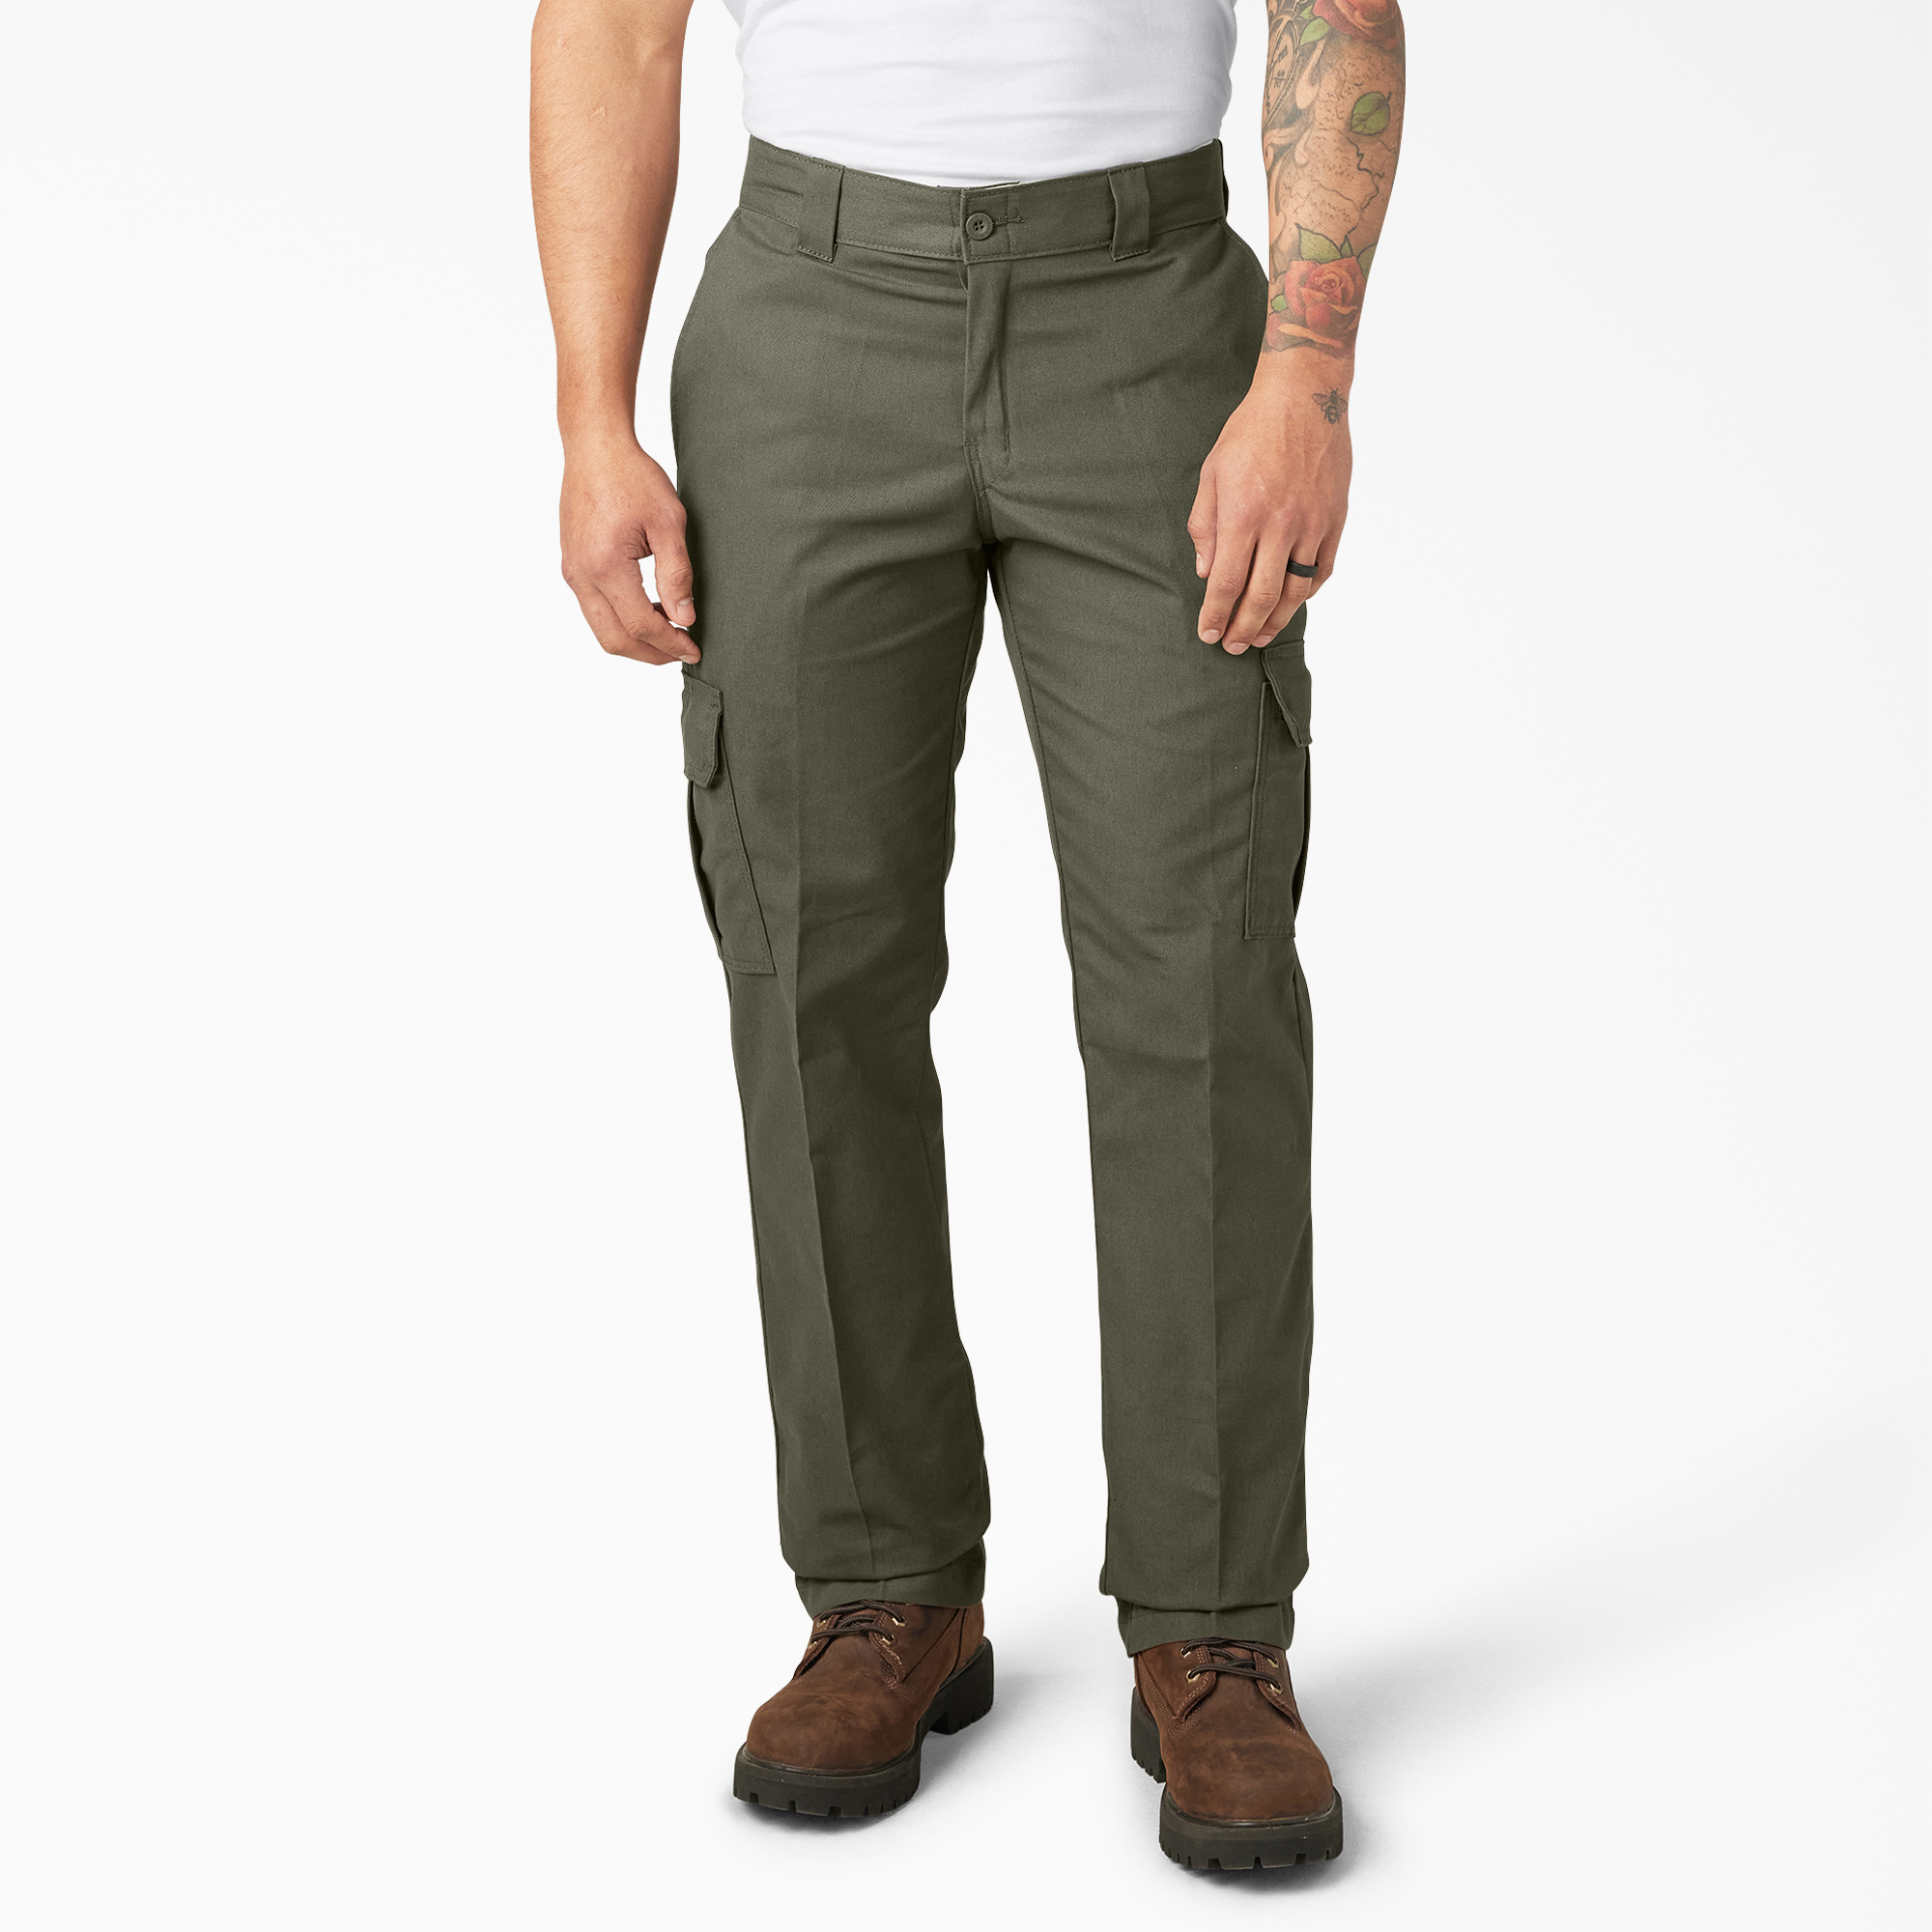 Dickies Pants Beige Size 48X30 874 Classic Fit Work Pants Khaki